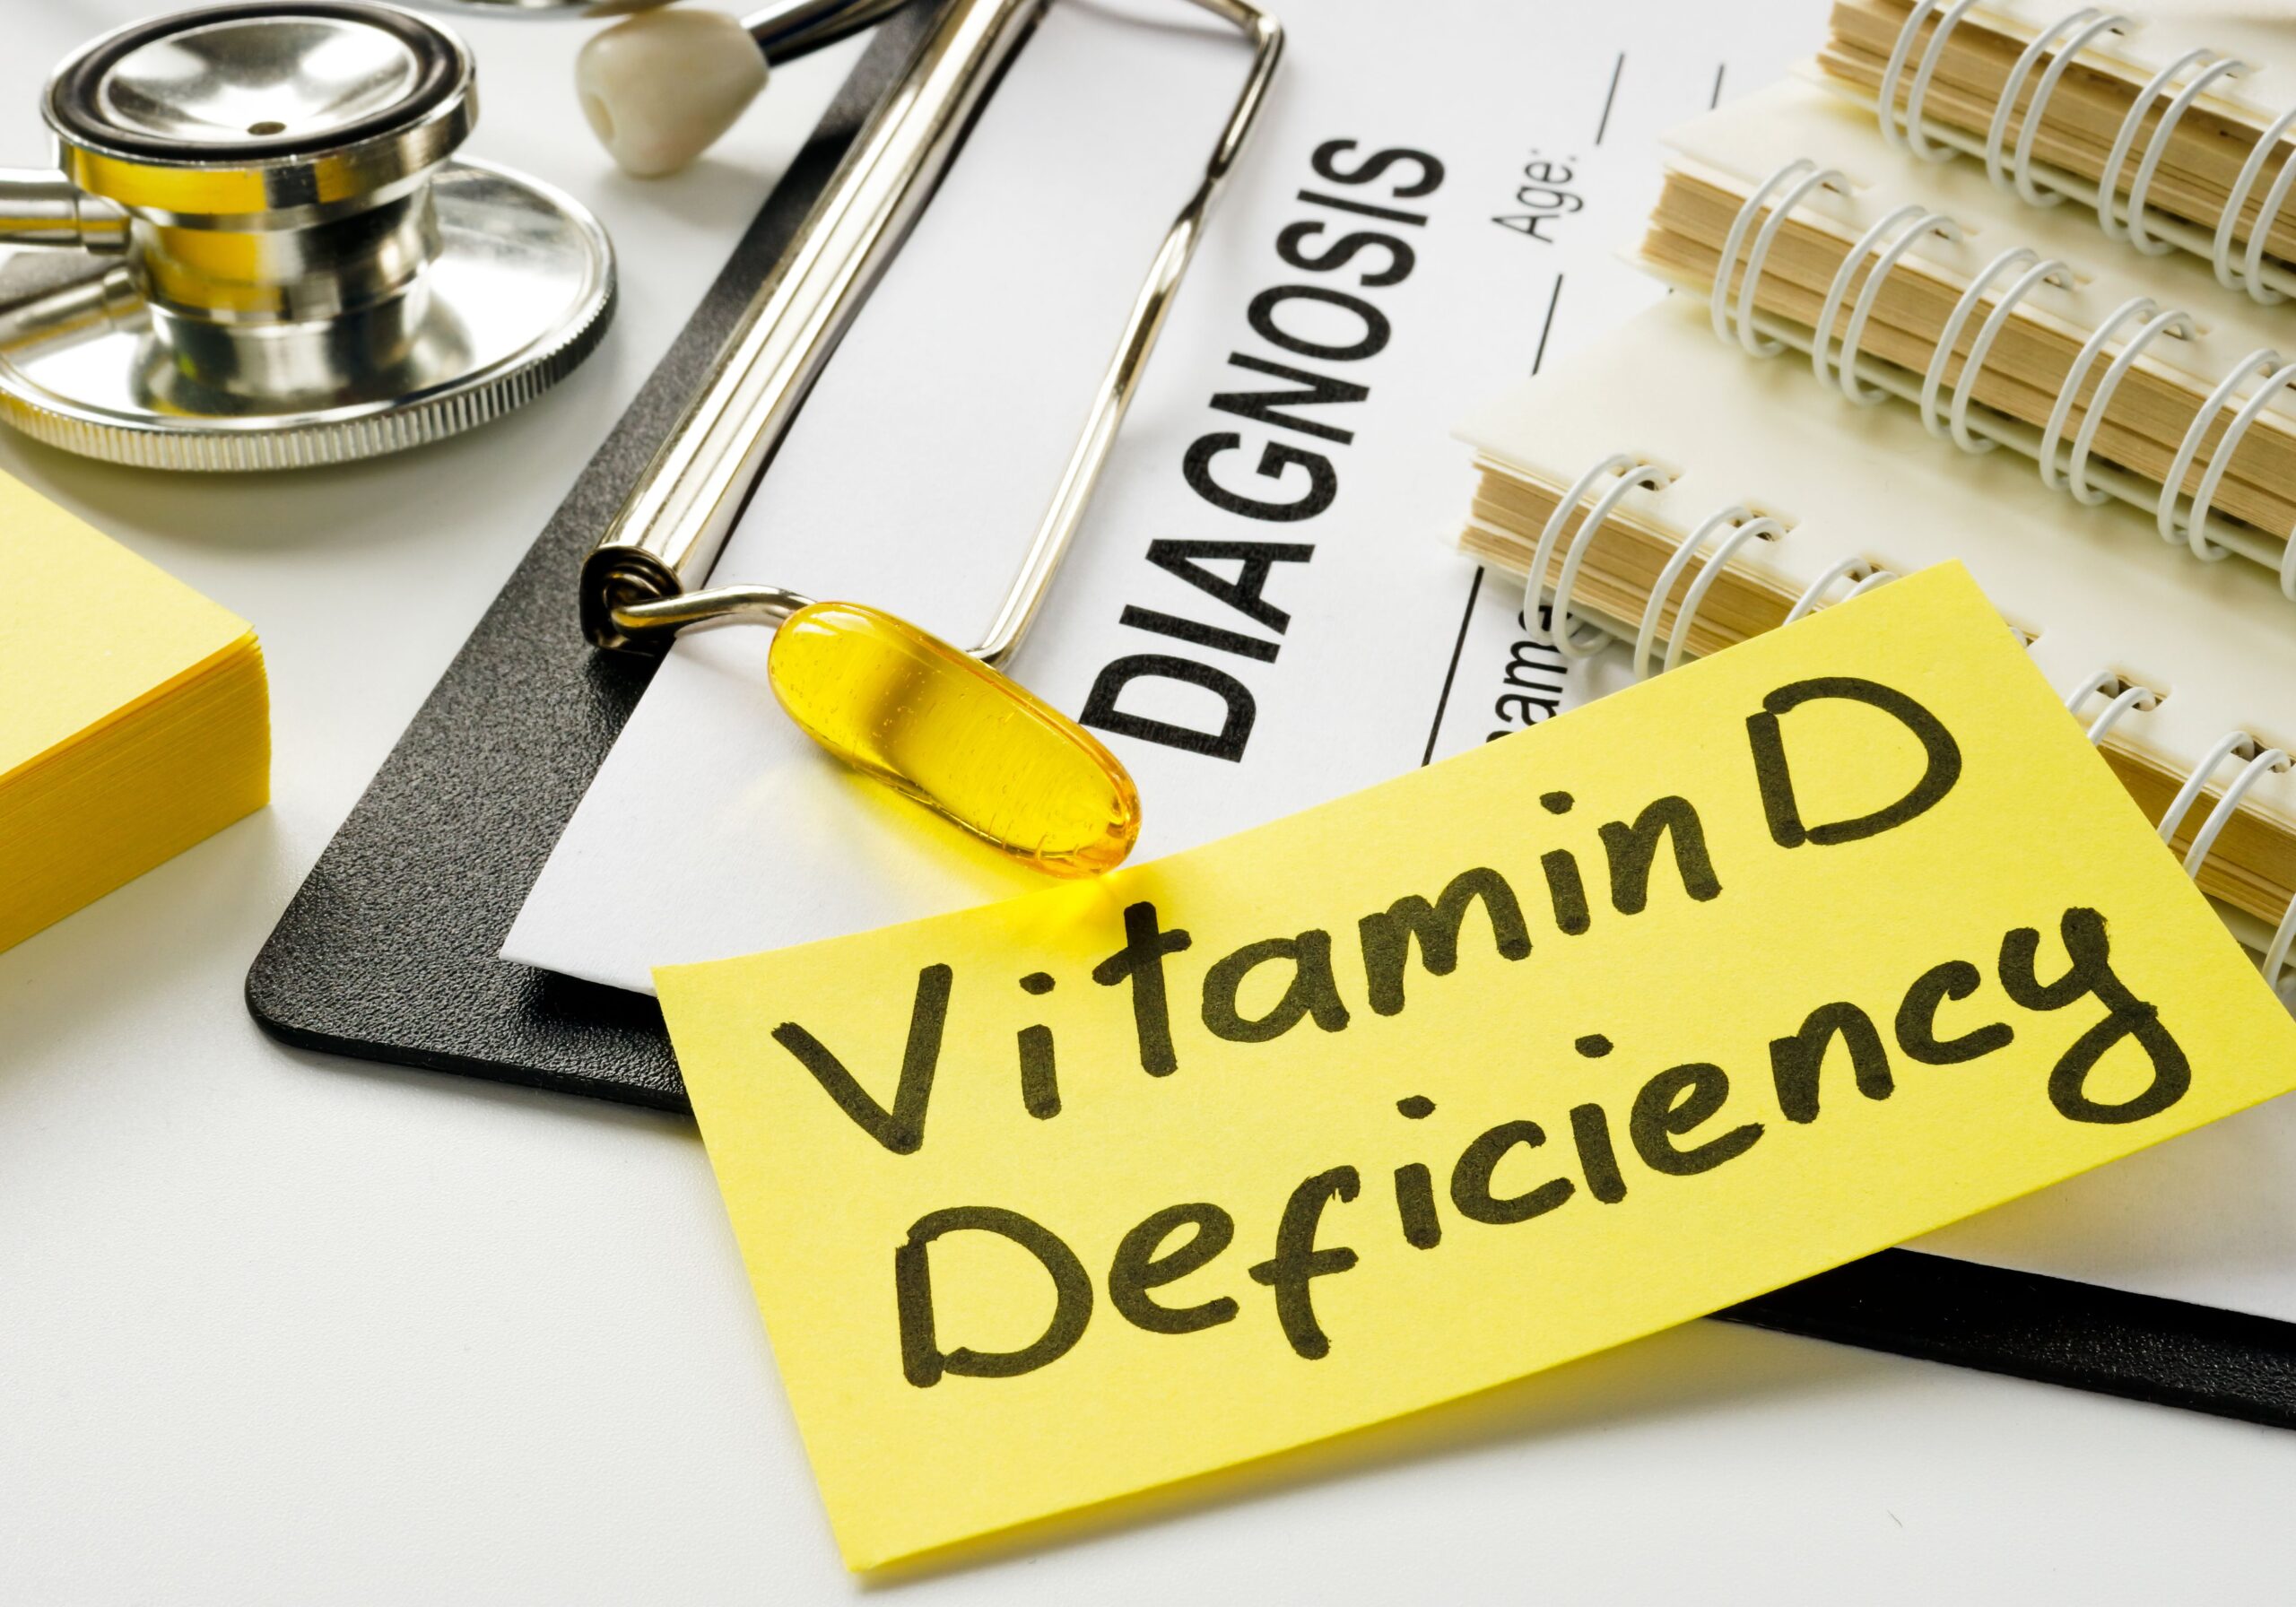 Signs of Vitamin D Deficiency